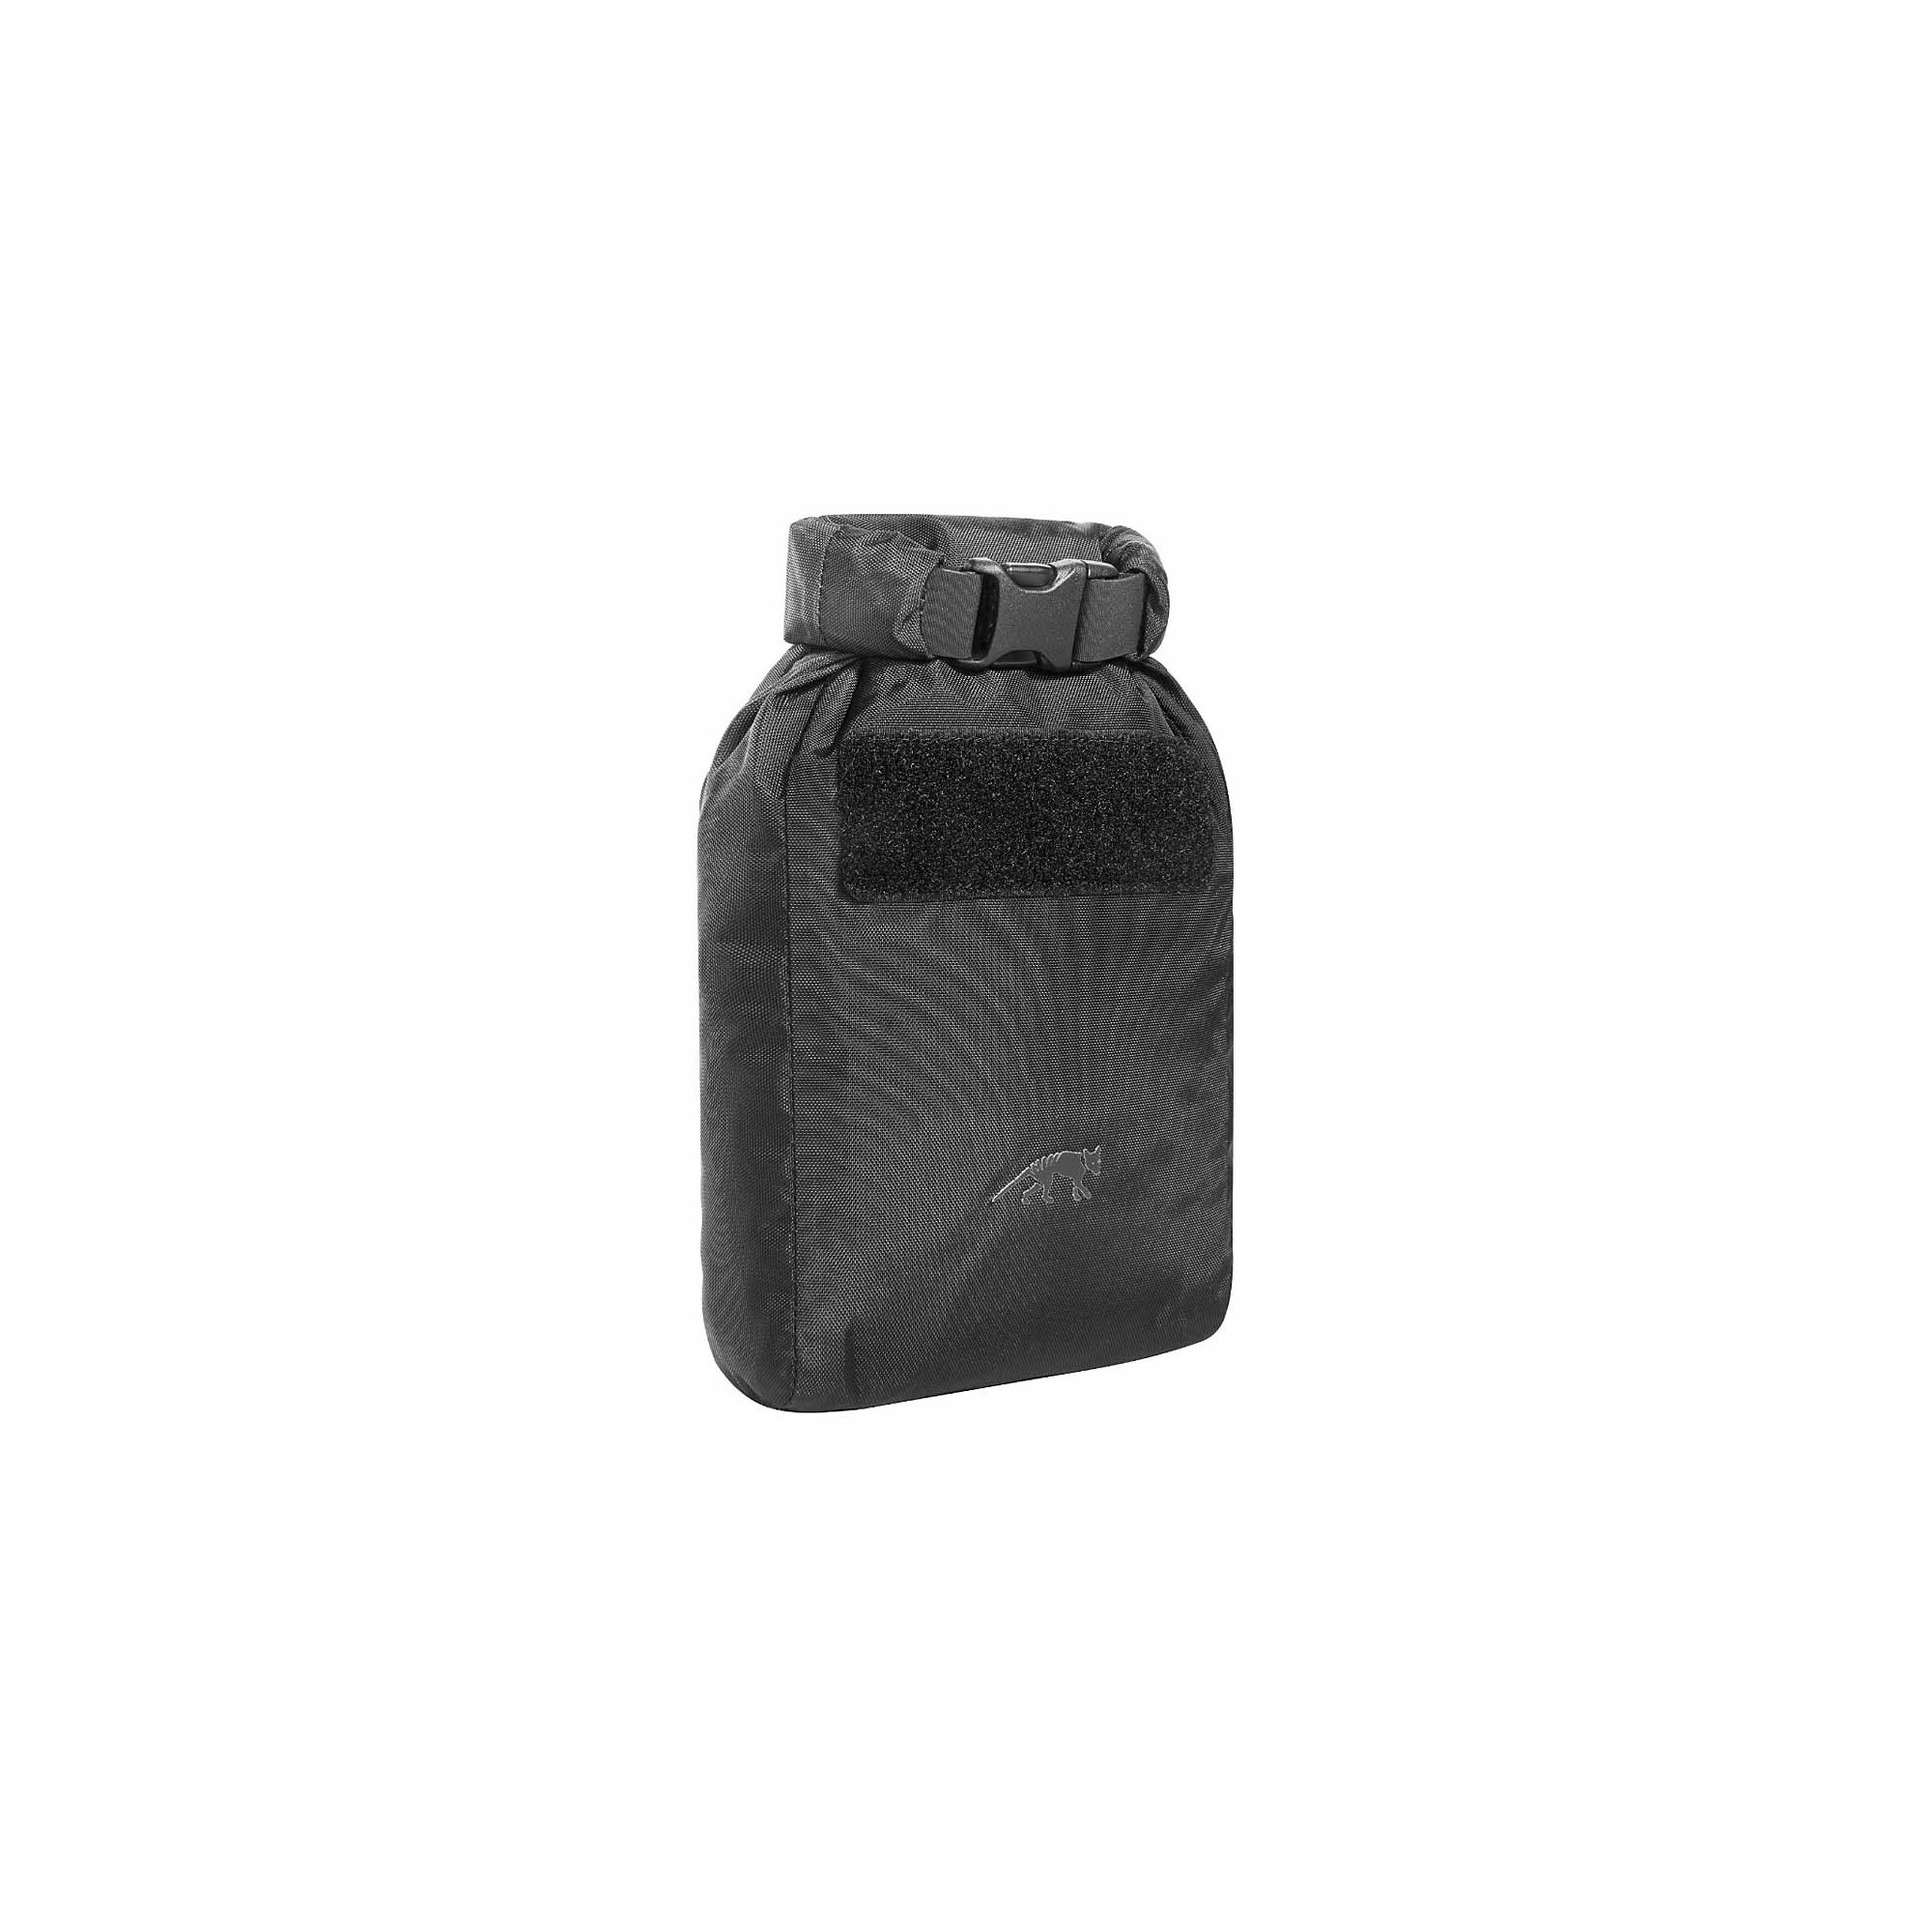 First Aid Kit Basic waterproof noir